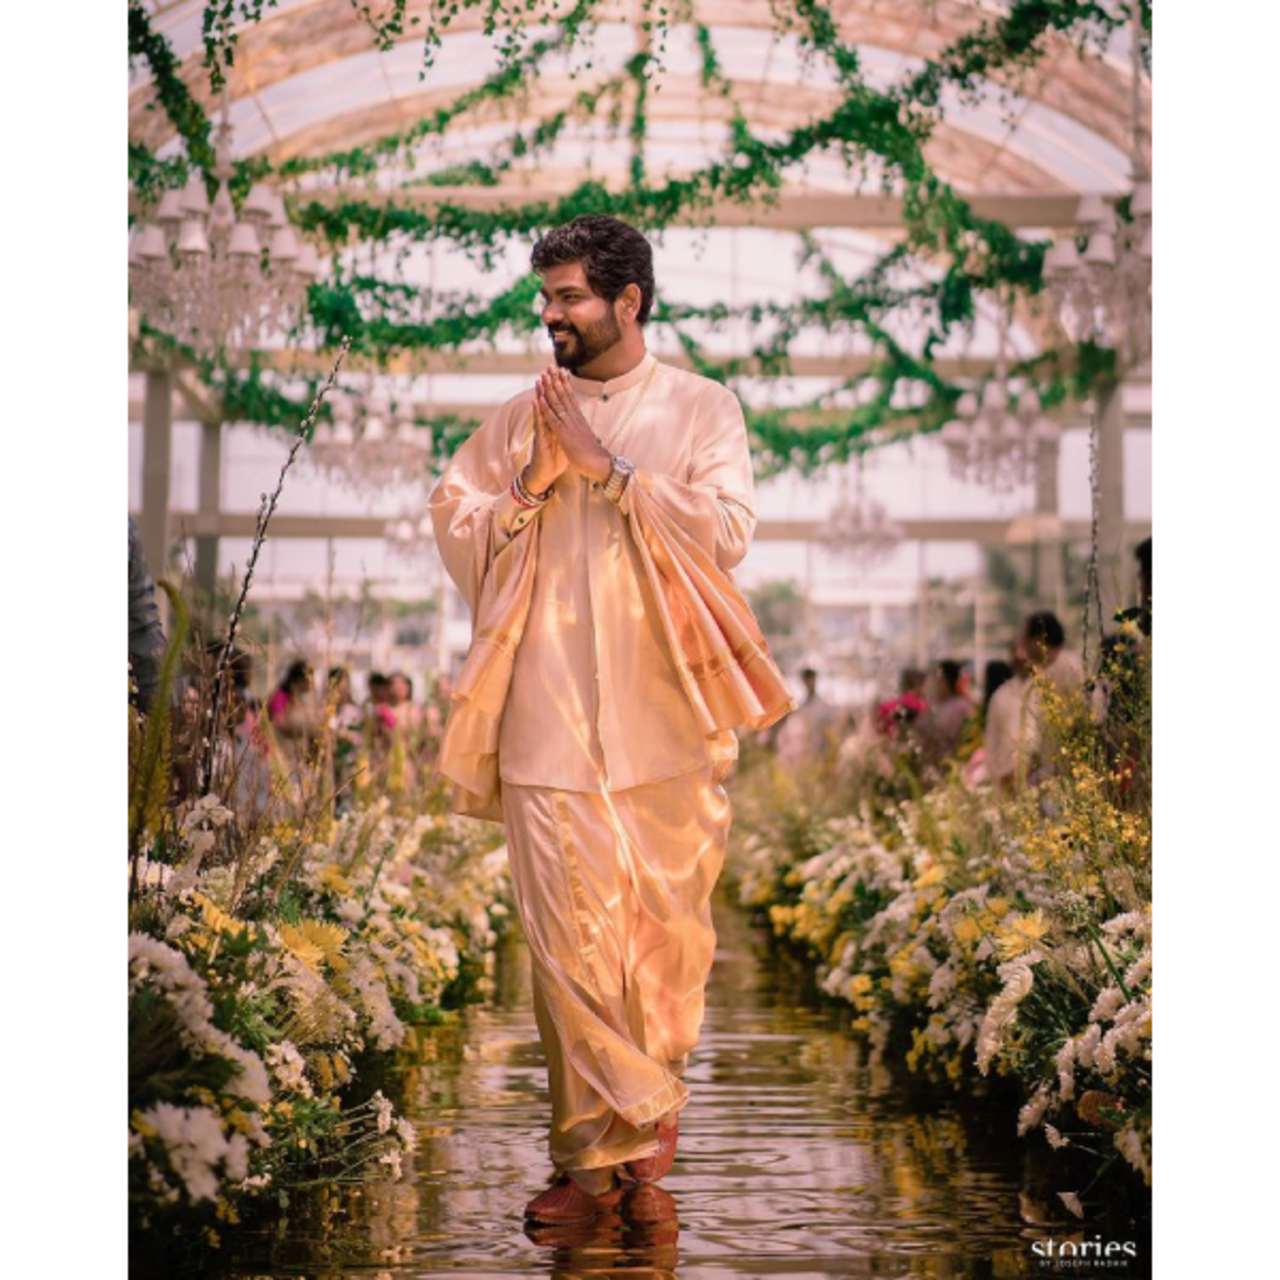 The stunning groom Vignesh Shivan